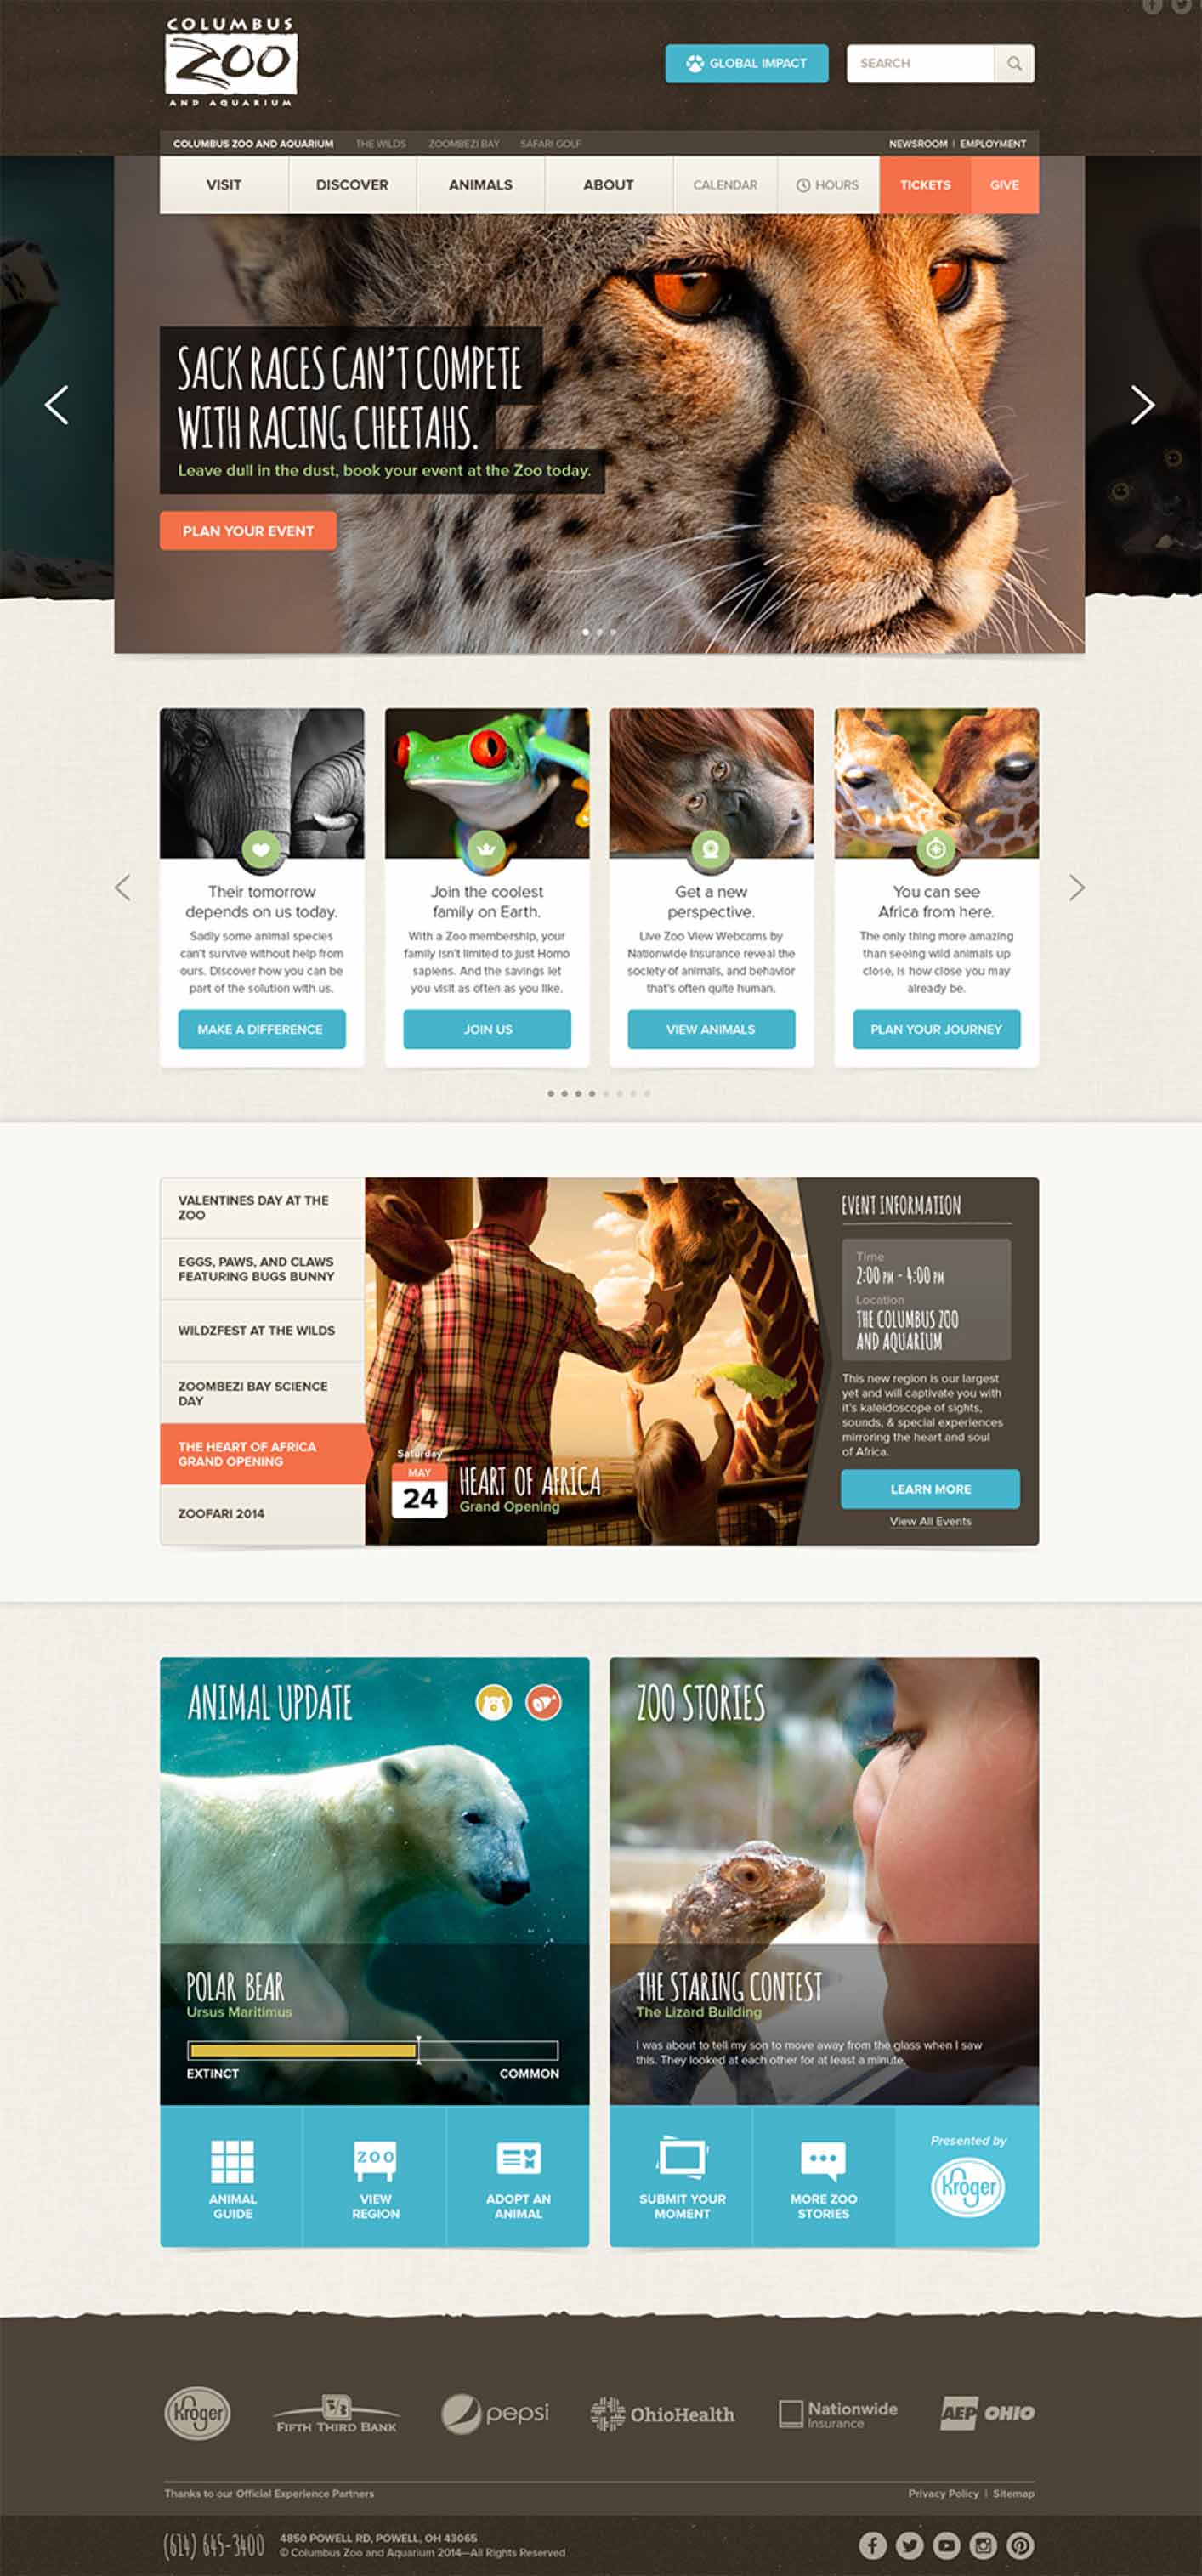 Columbus Zoo Website - Full Screenshot